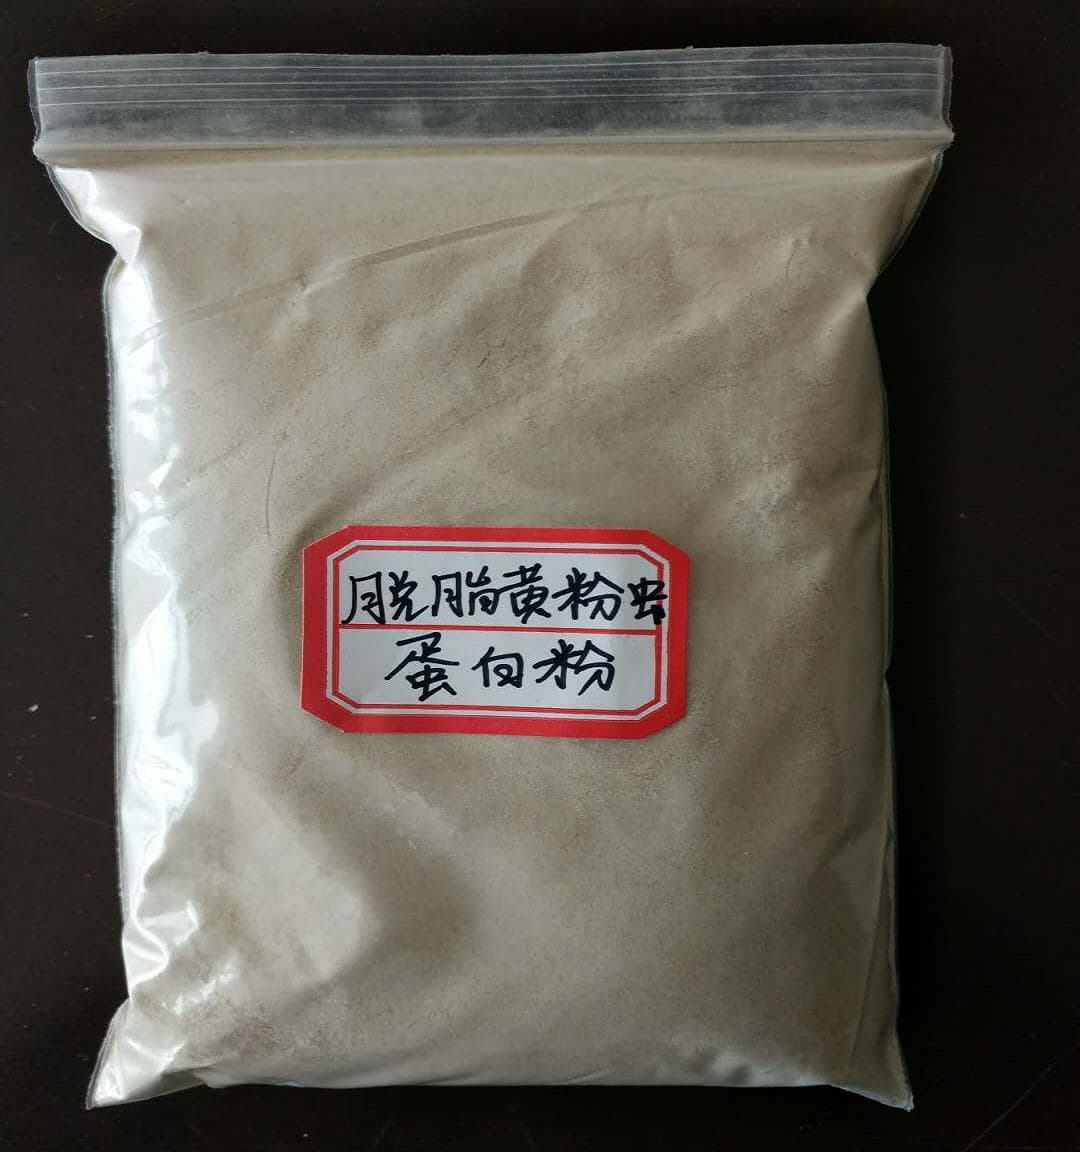 mealworm protein powder